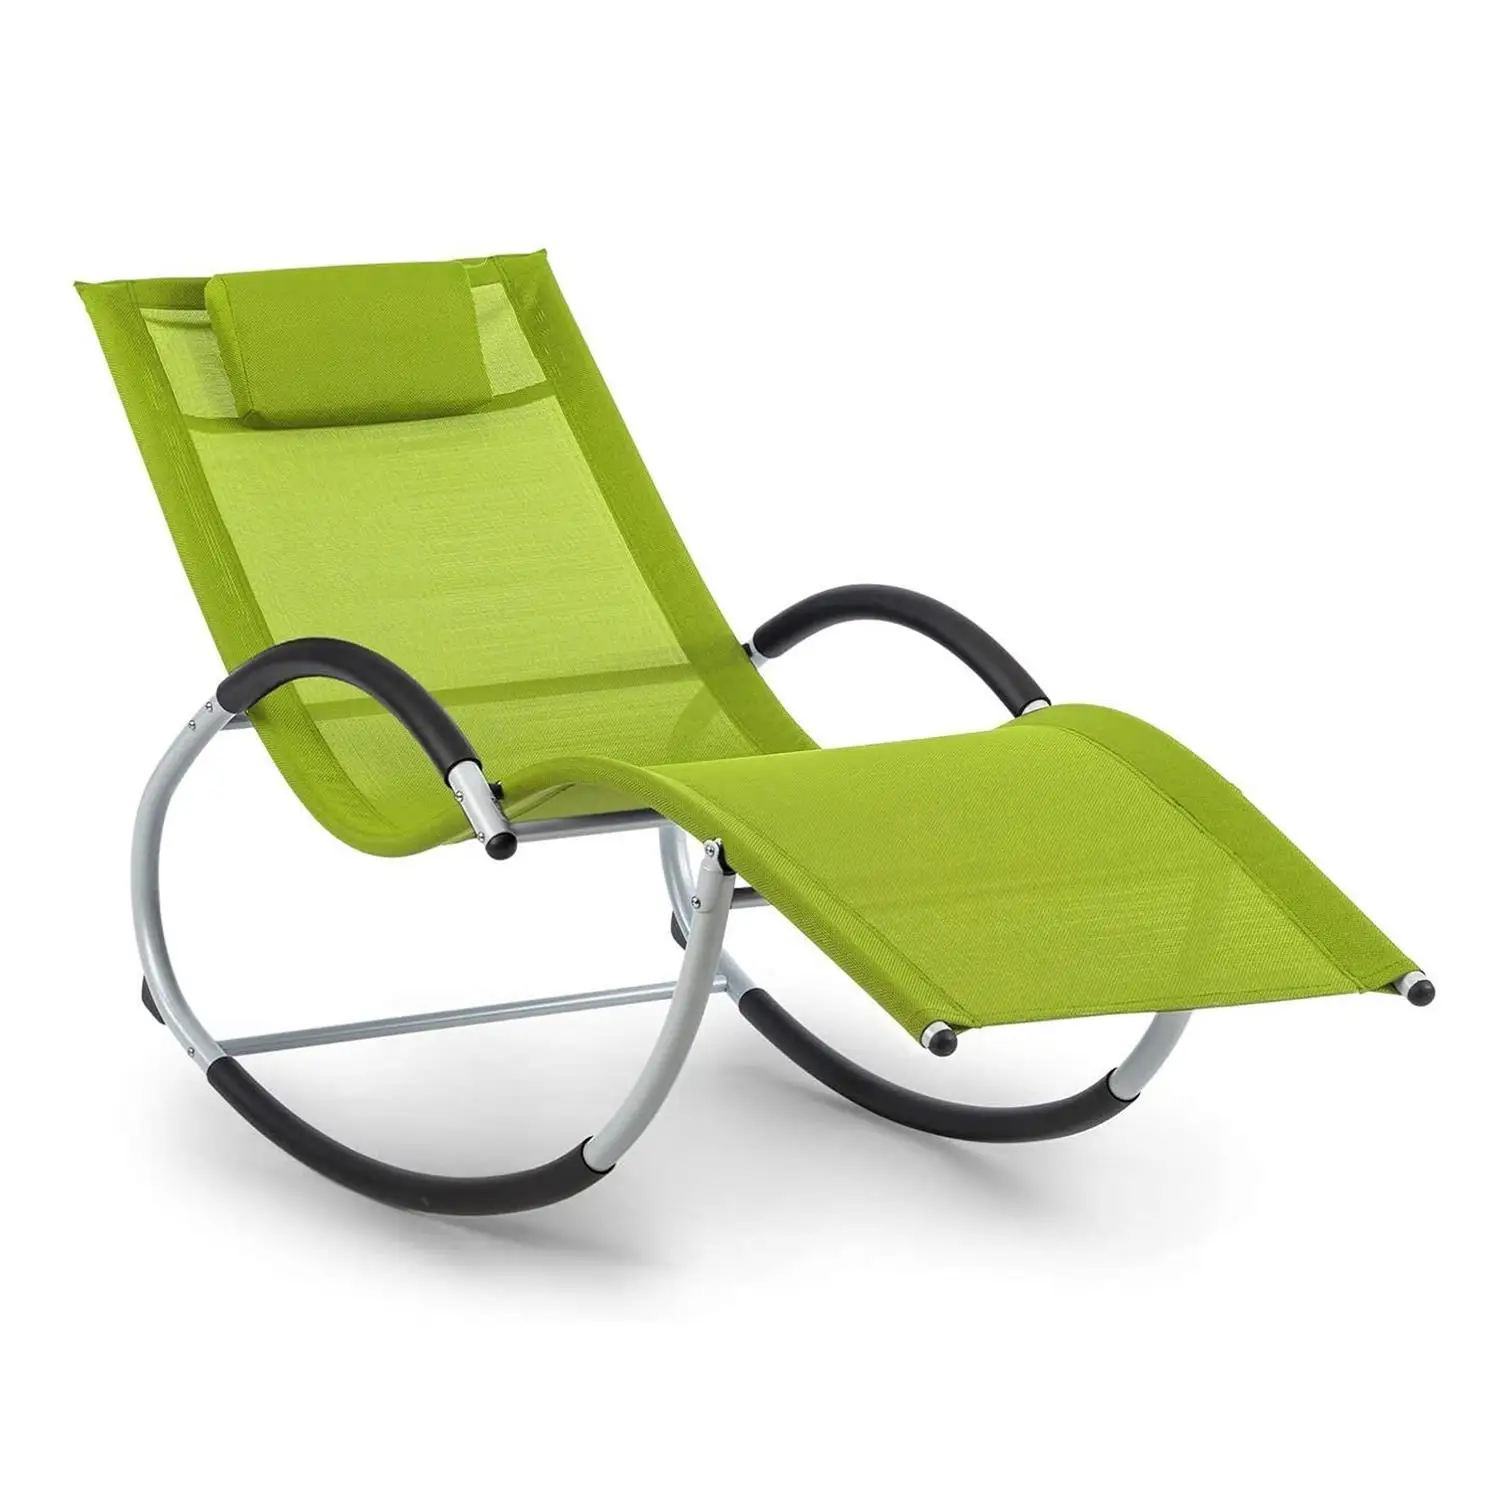 2021 New Arrival Outdoor Garden Beach Chair Metal Steel Lightweight